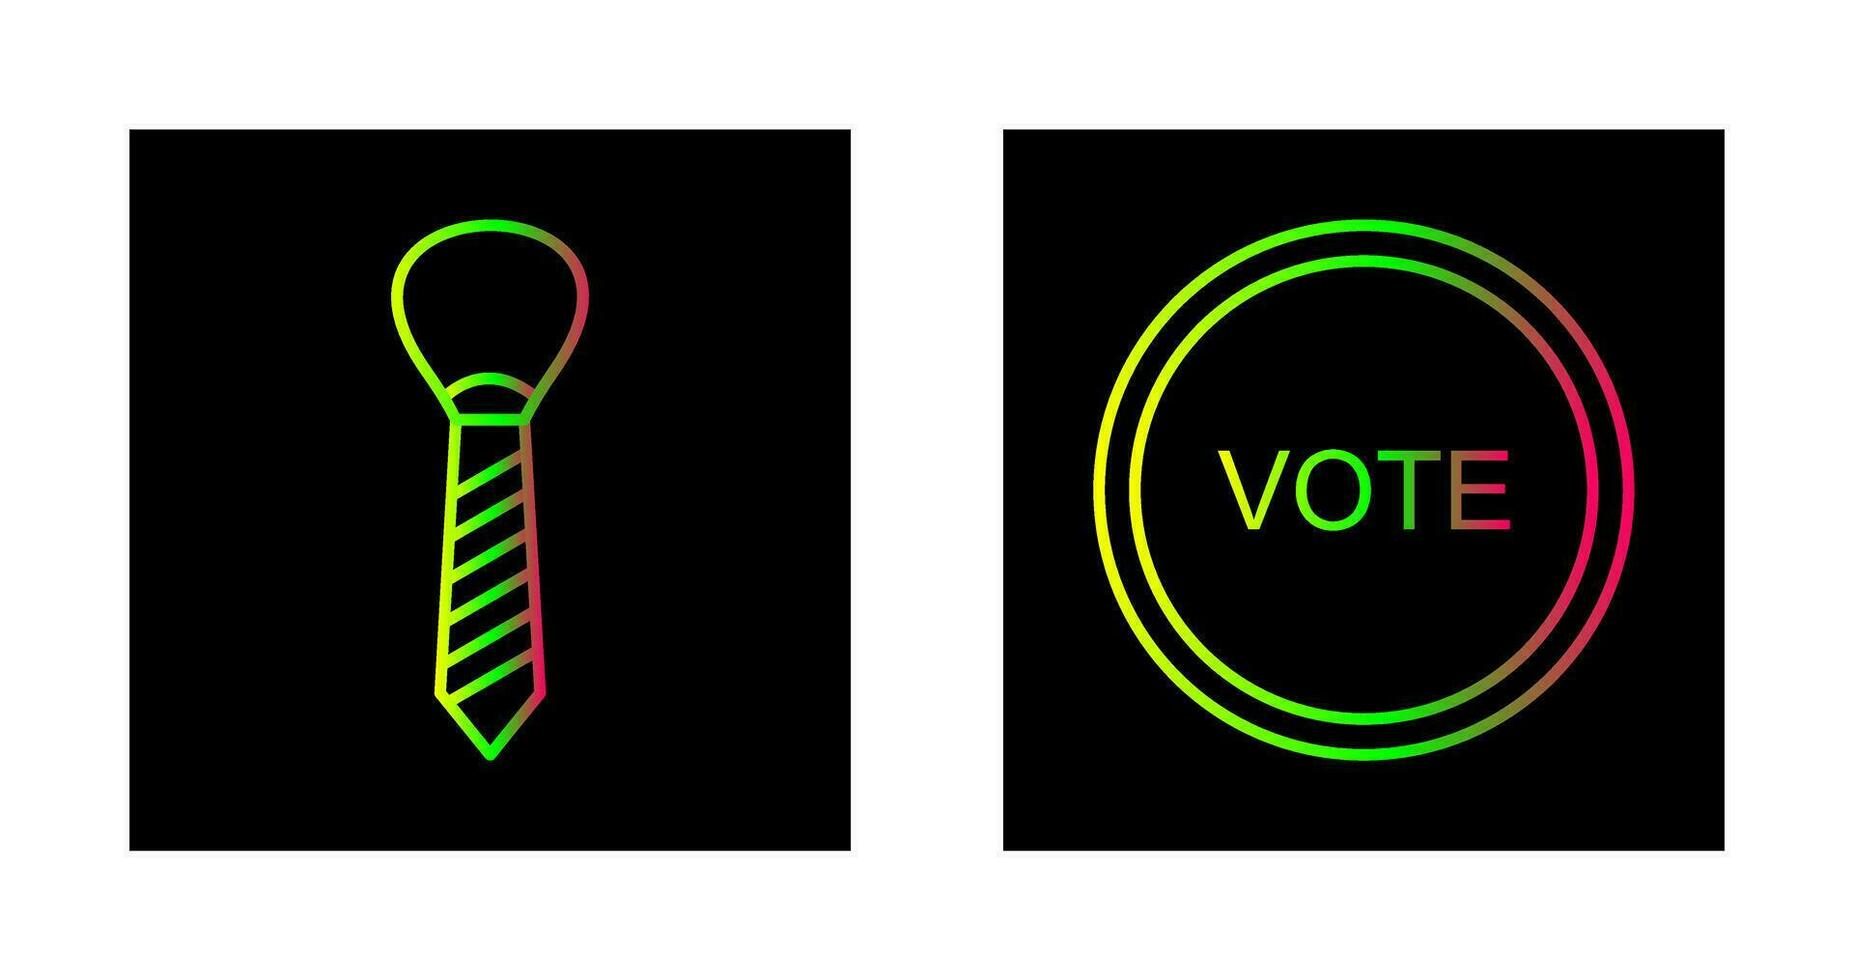 Tie and Vote Link Icon vector